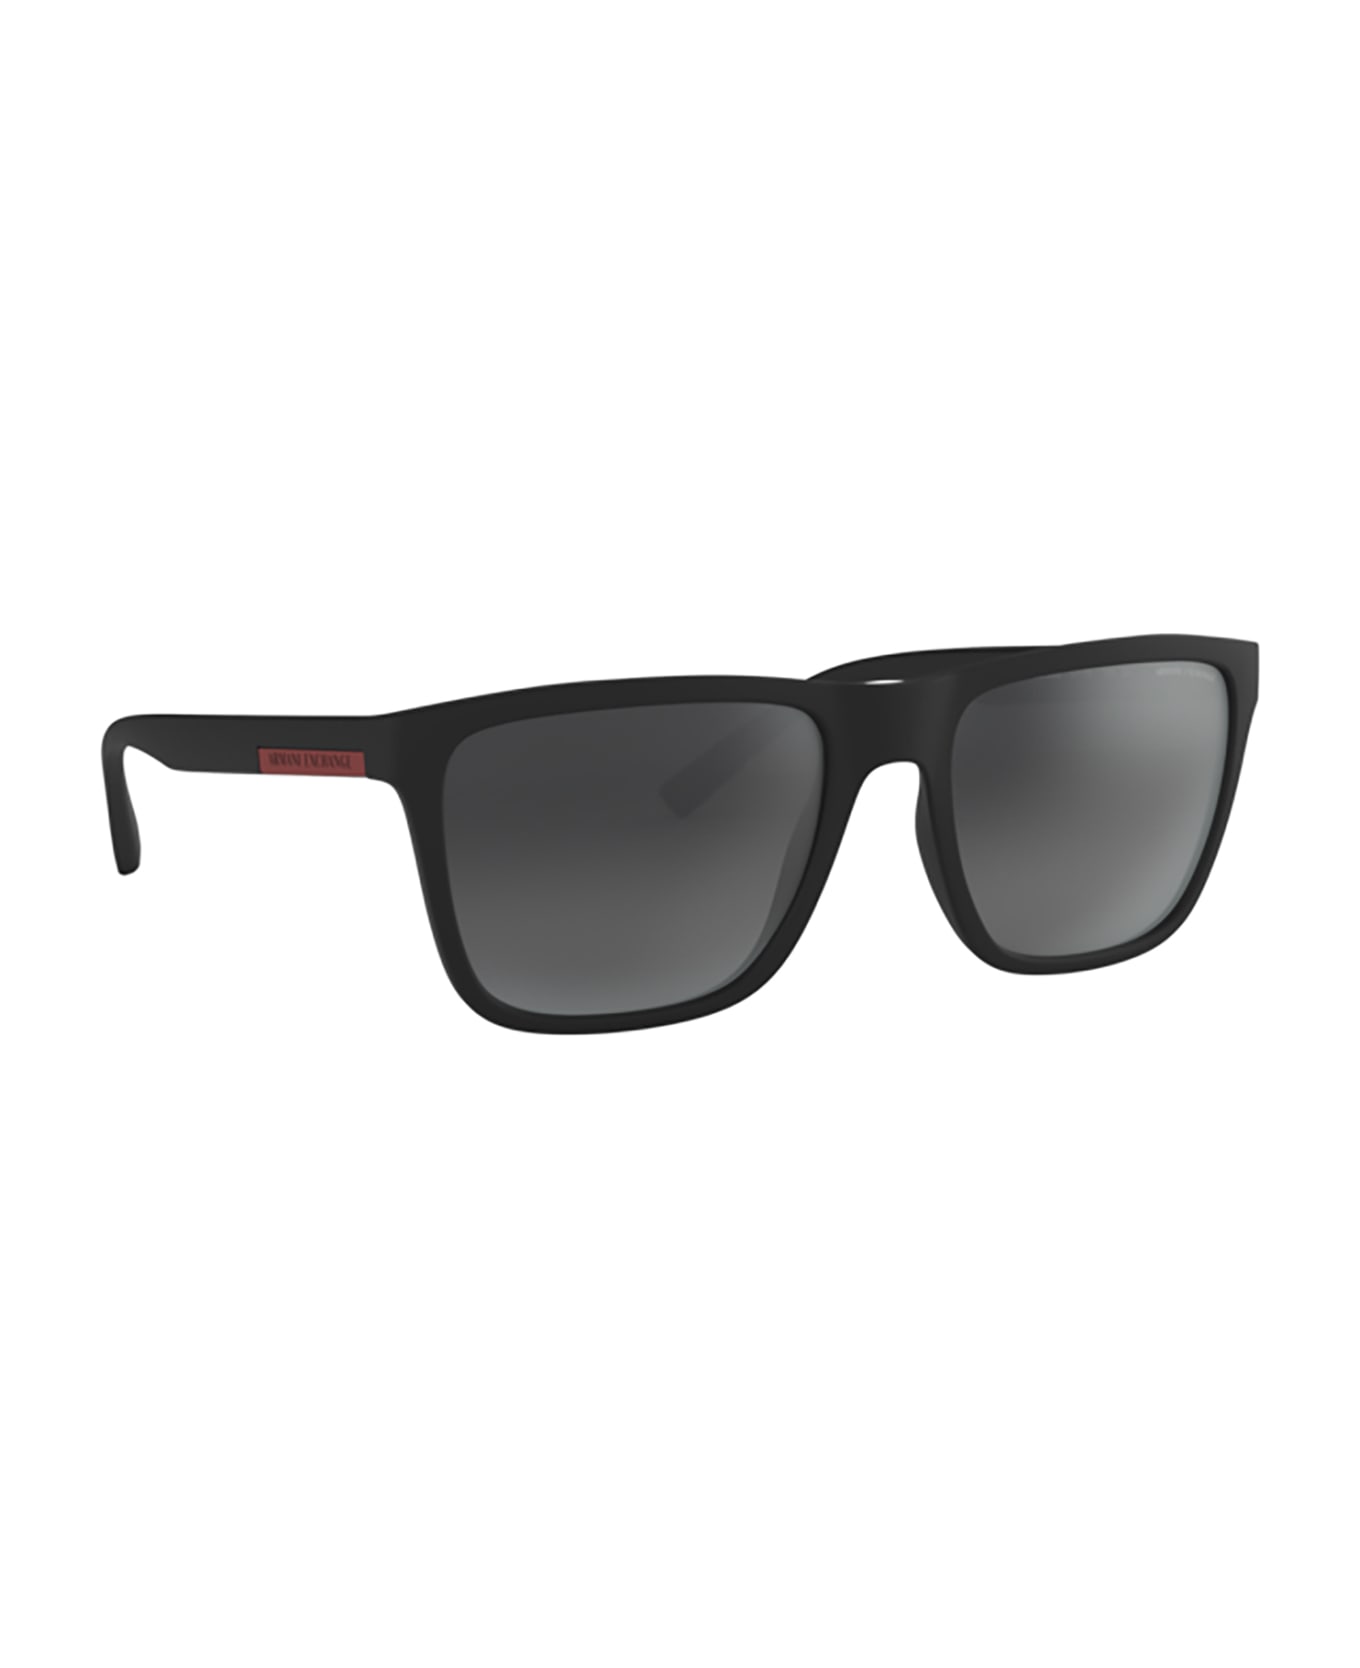 Armani Exchange Ax4080s Matte Black Sunglasses - Matte Black